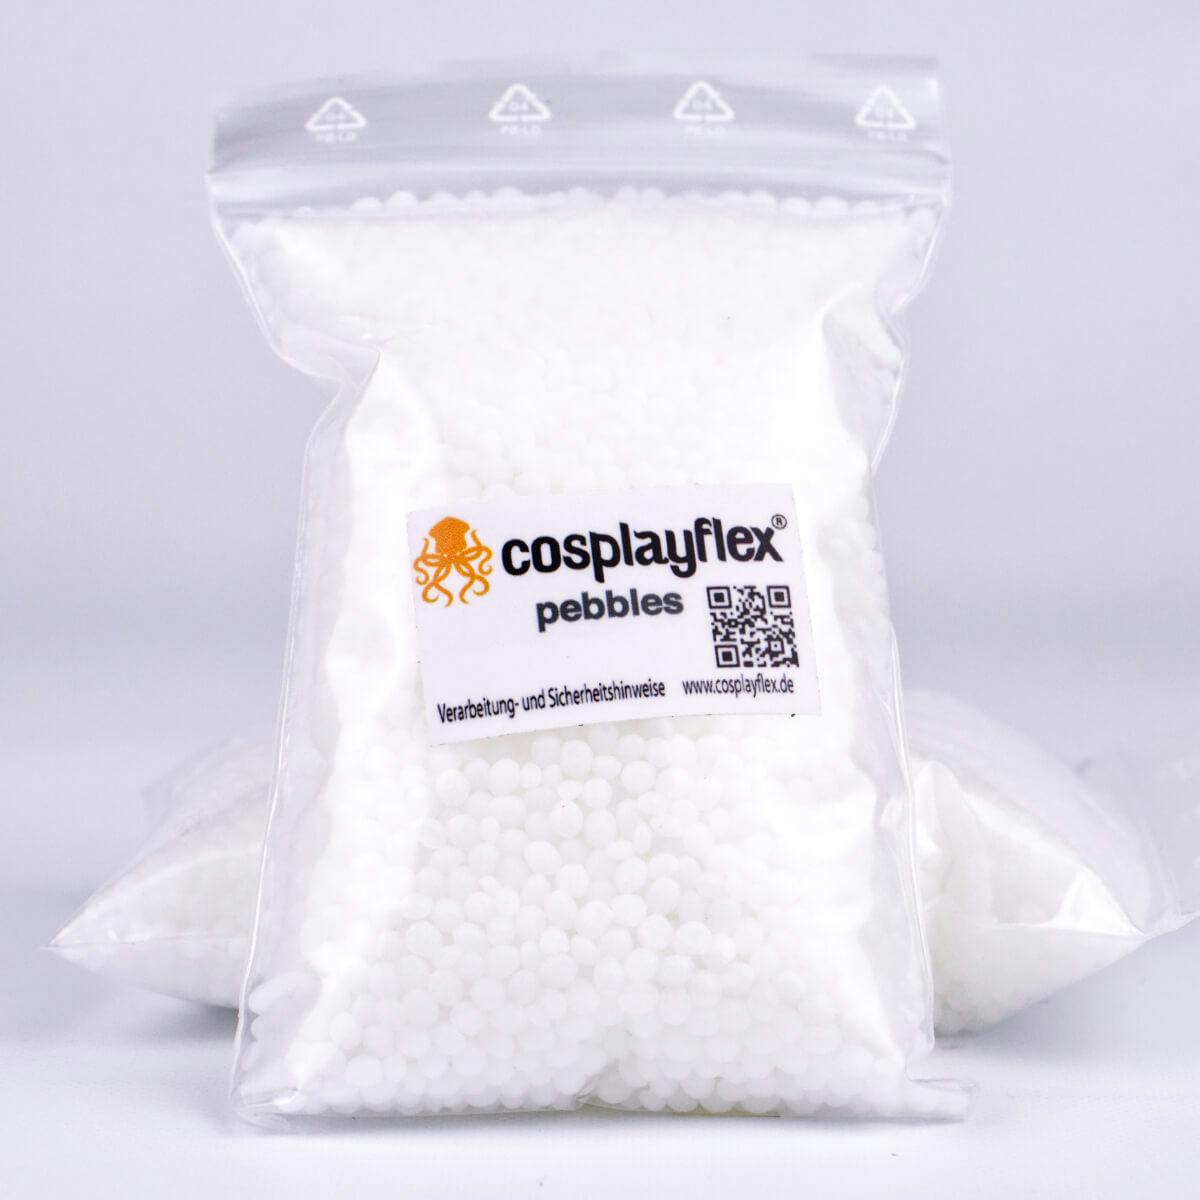 Bag of Cosplayflex Pebbles - thermoplastic pebbles